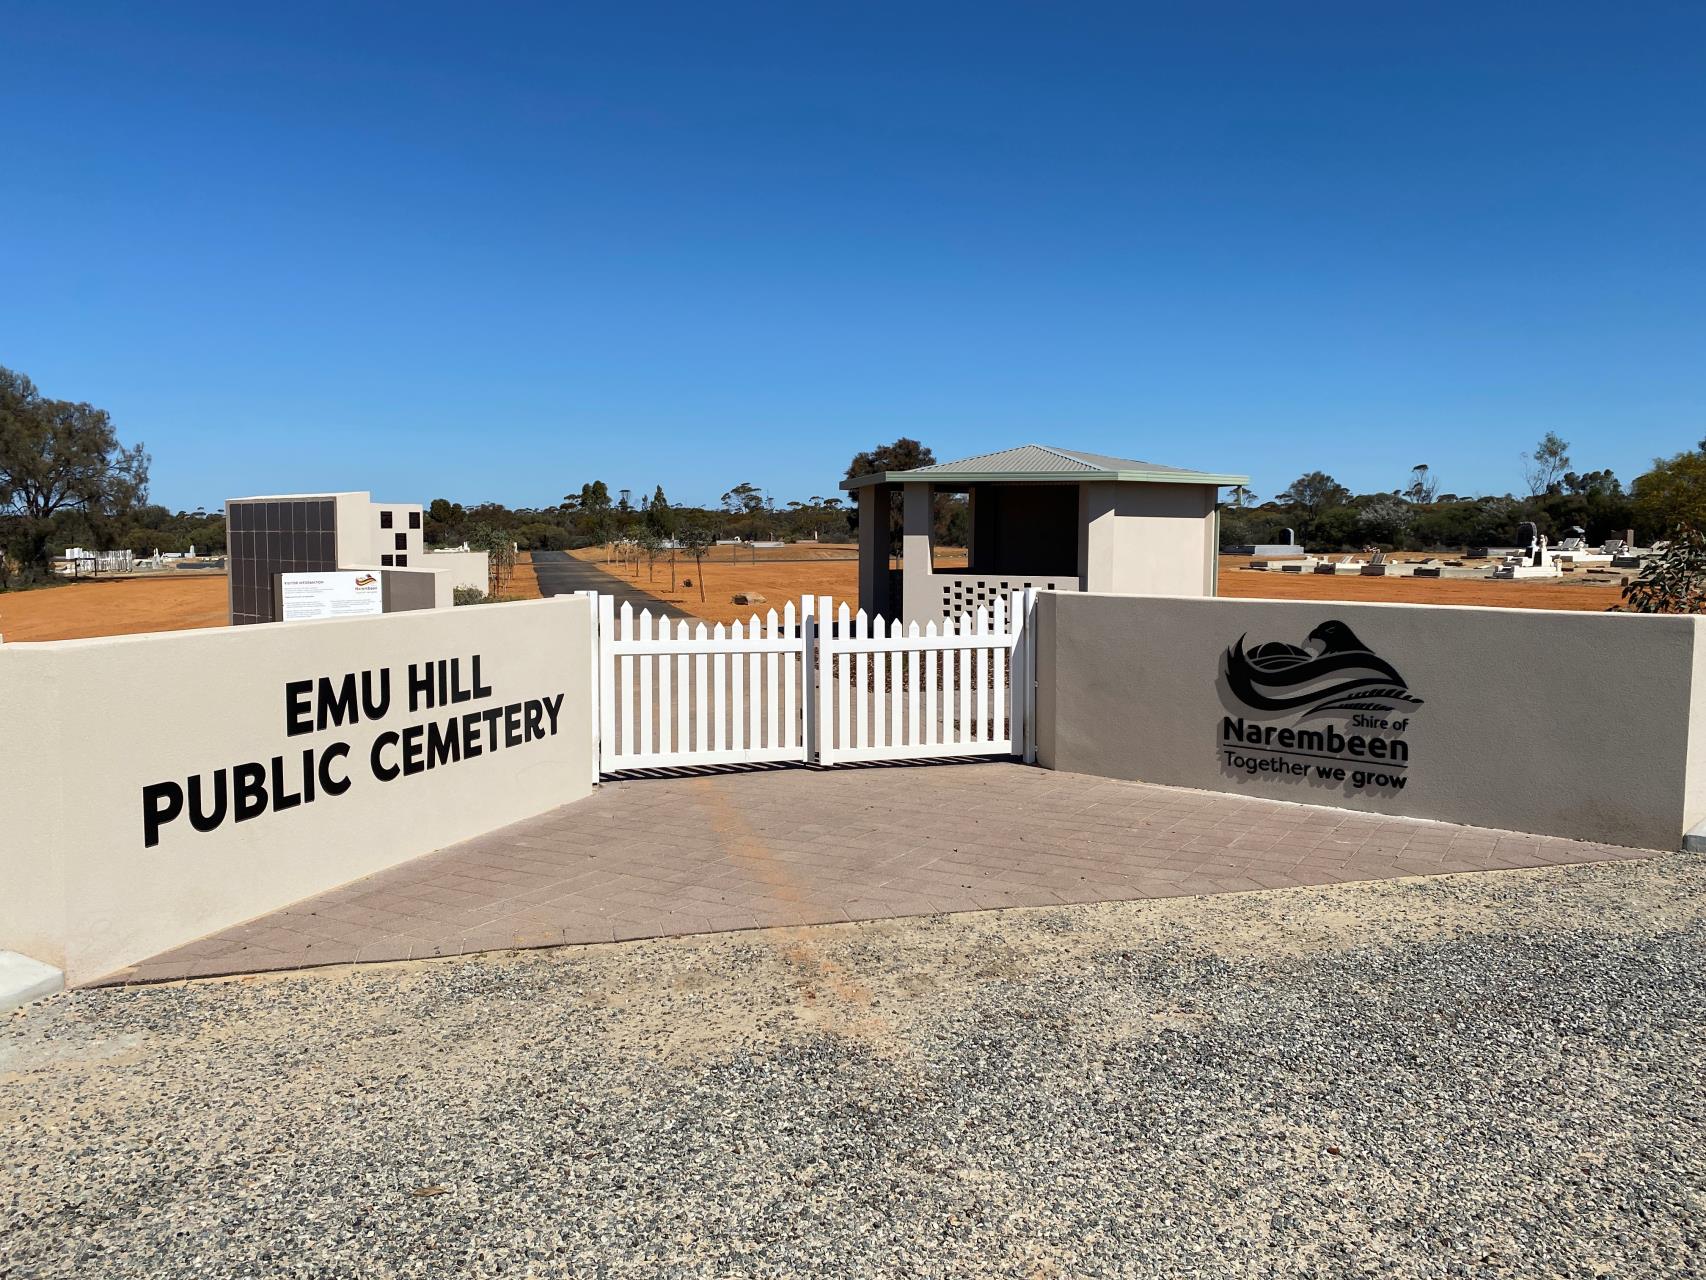 Emu Hill Public Cemetery